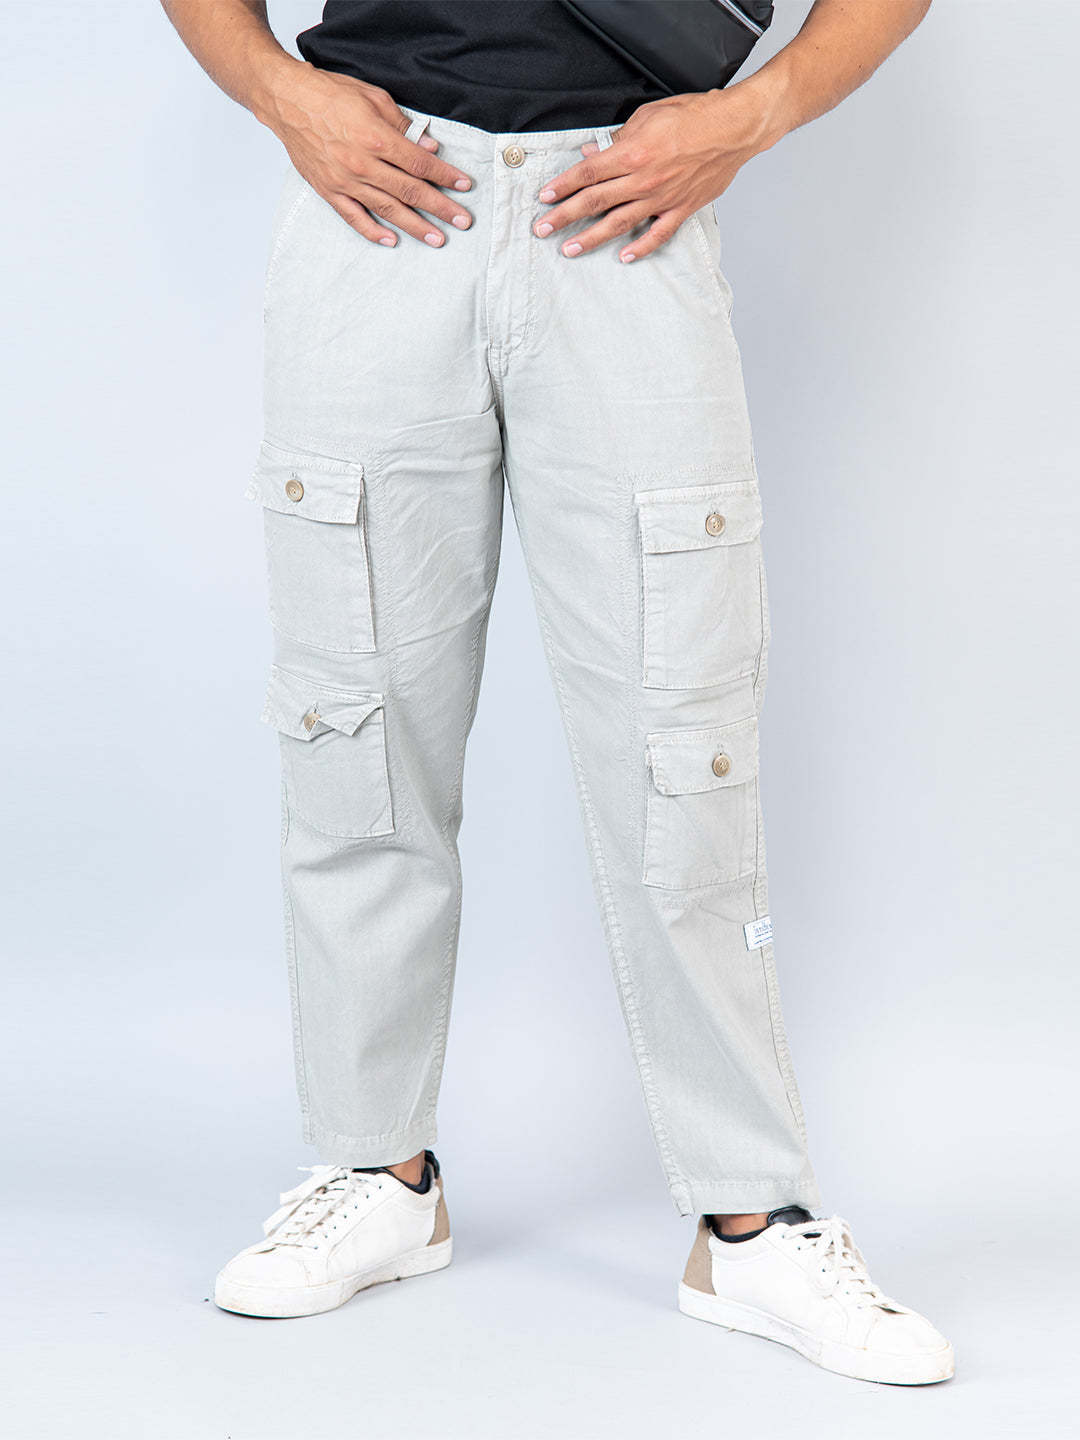 Men Baggy Pants Loose Cargo Trouser Hip Hop Pocket Dance Casual Big Size  Fashion | eBay